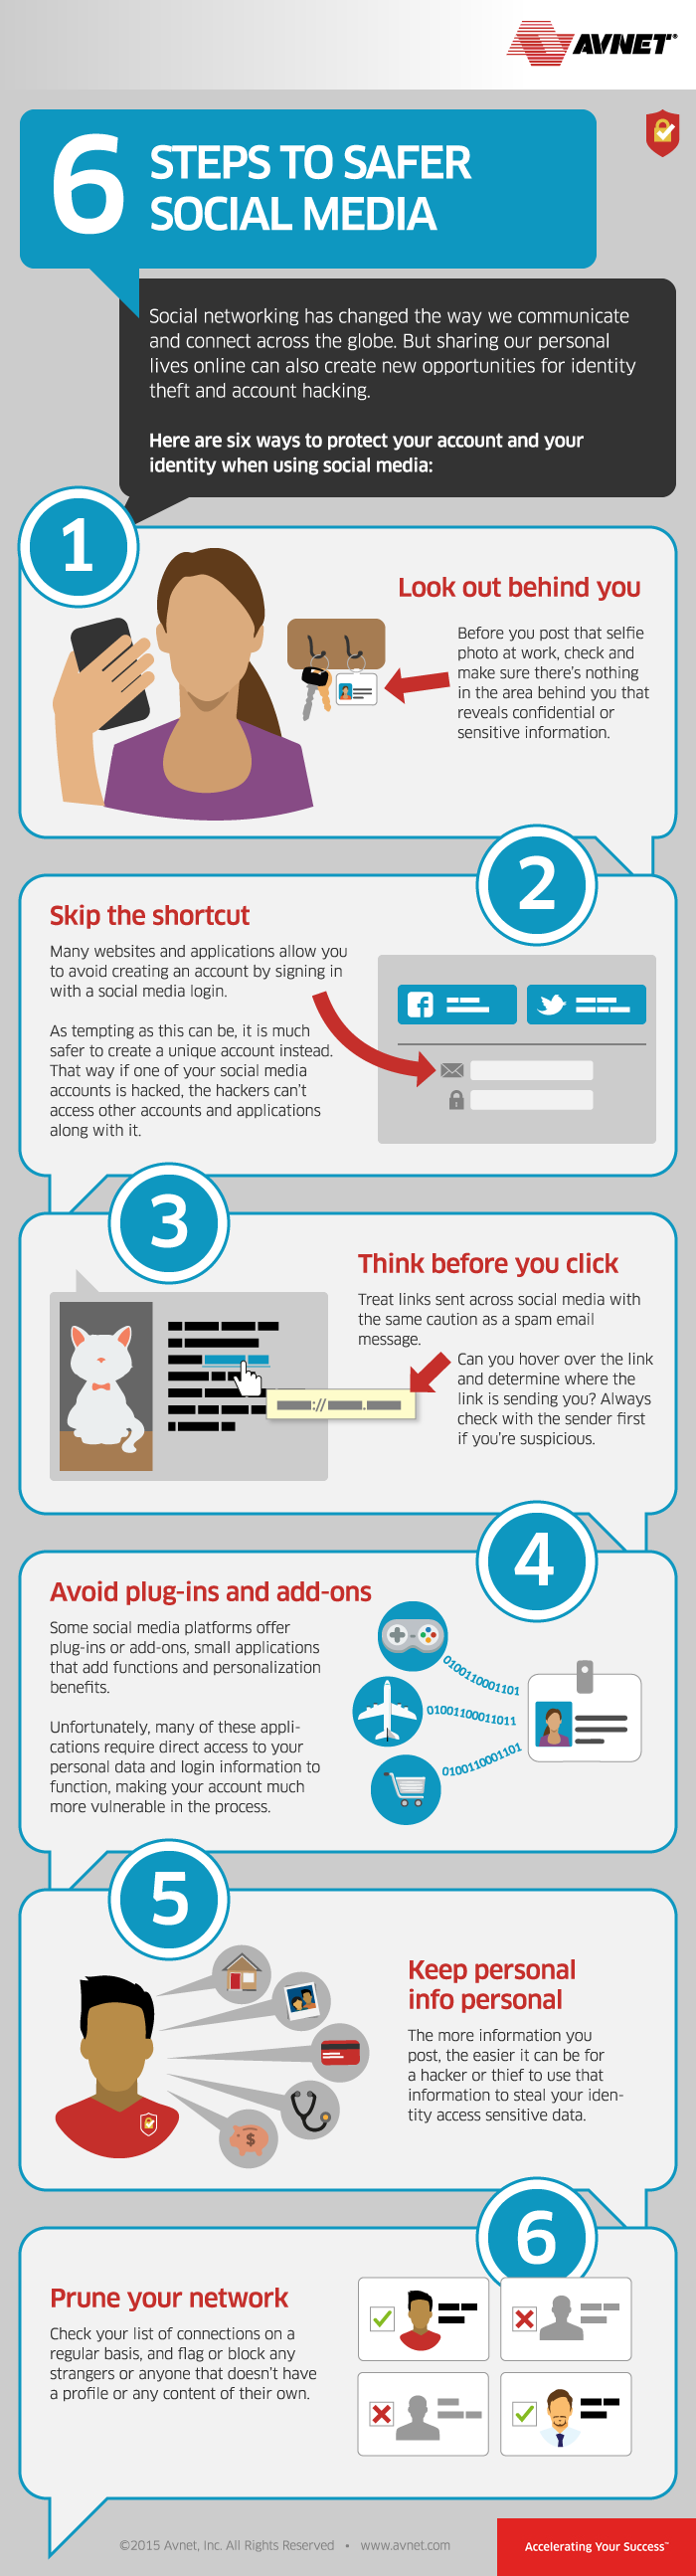 Social Media and Internet Safety Tips: 6 Steps to Safer #SocialMedia - #infographic